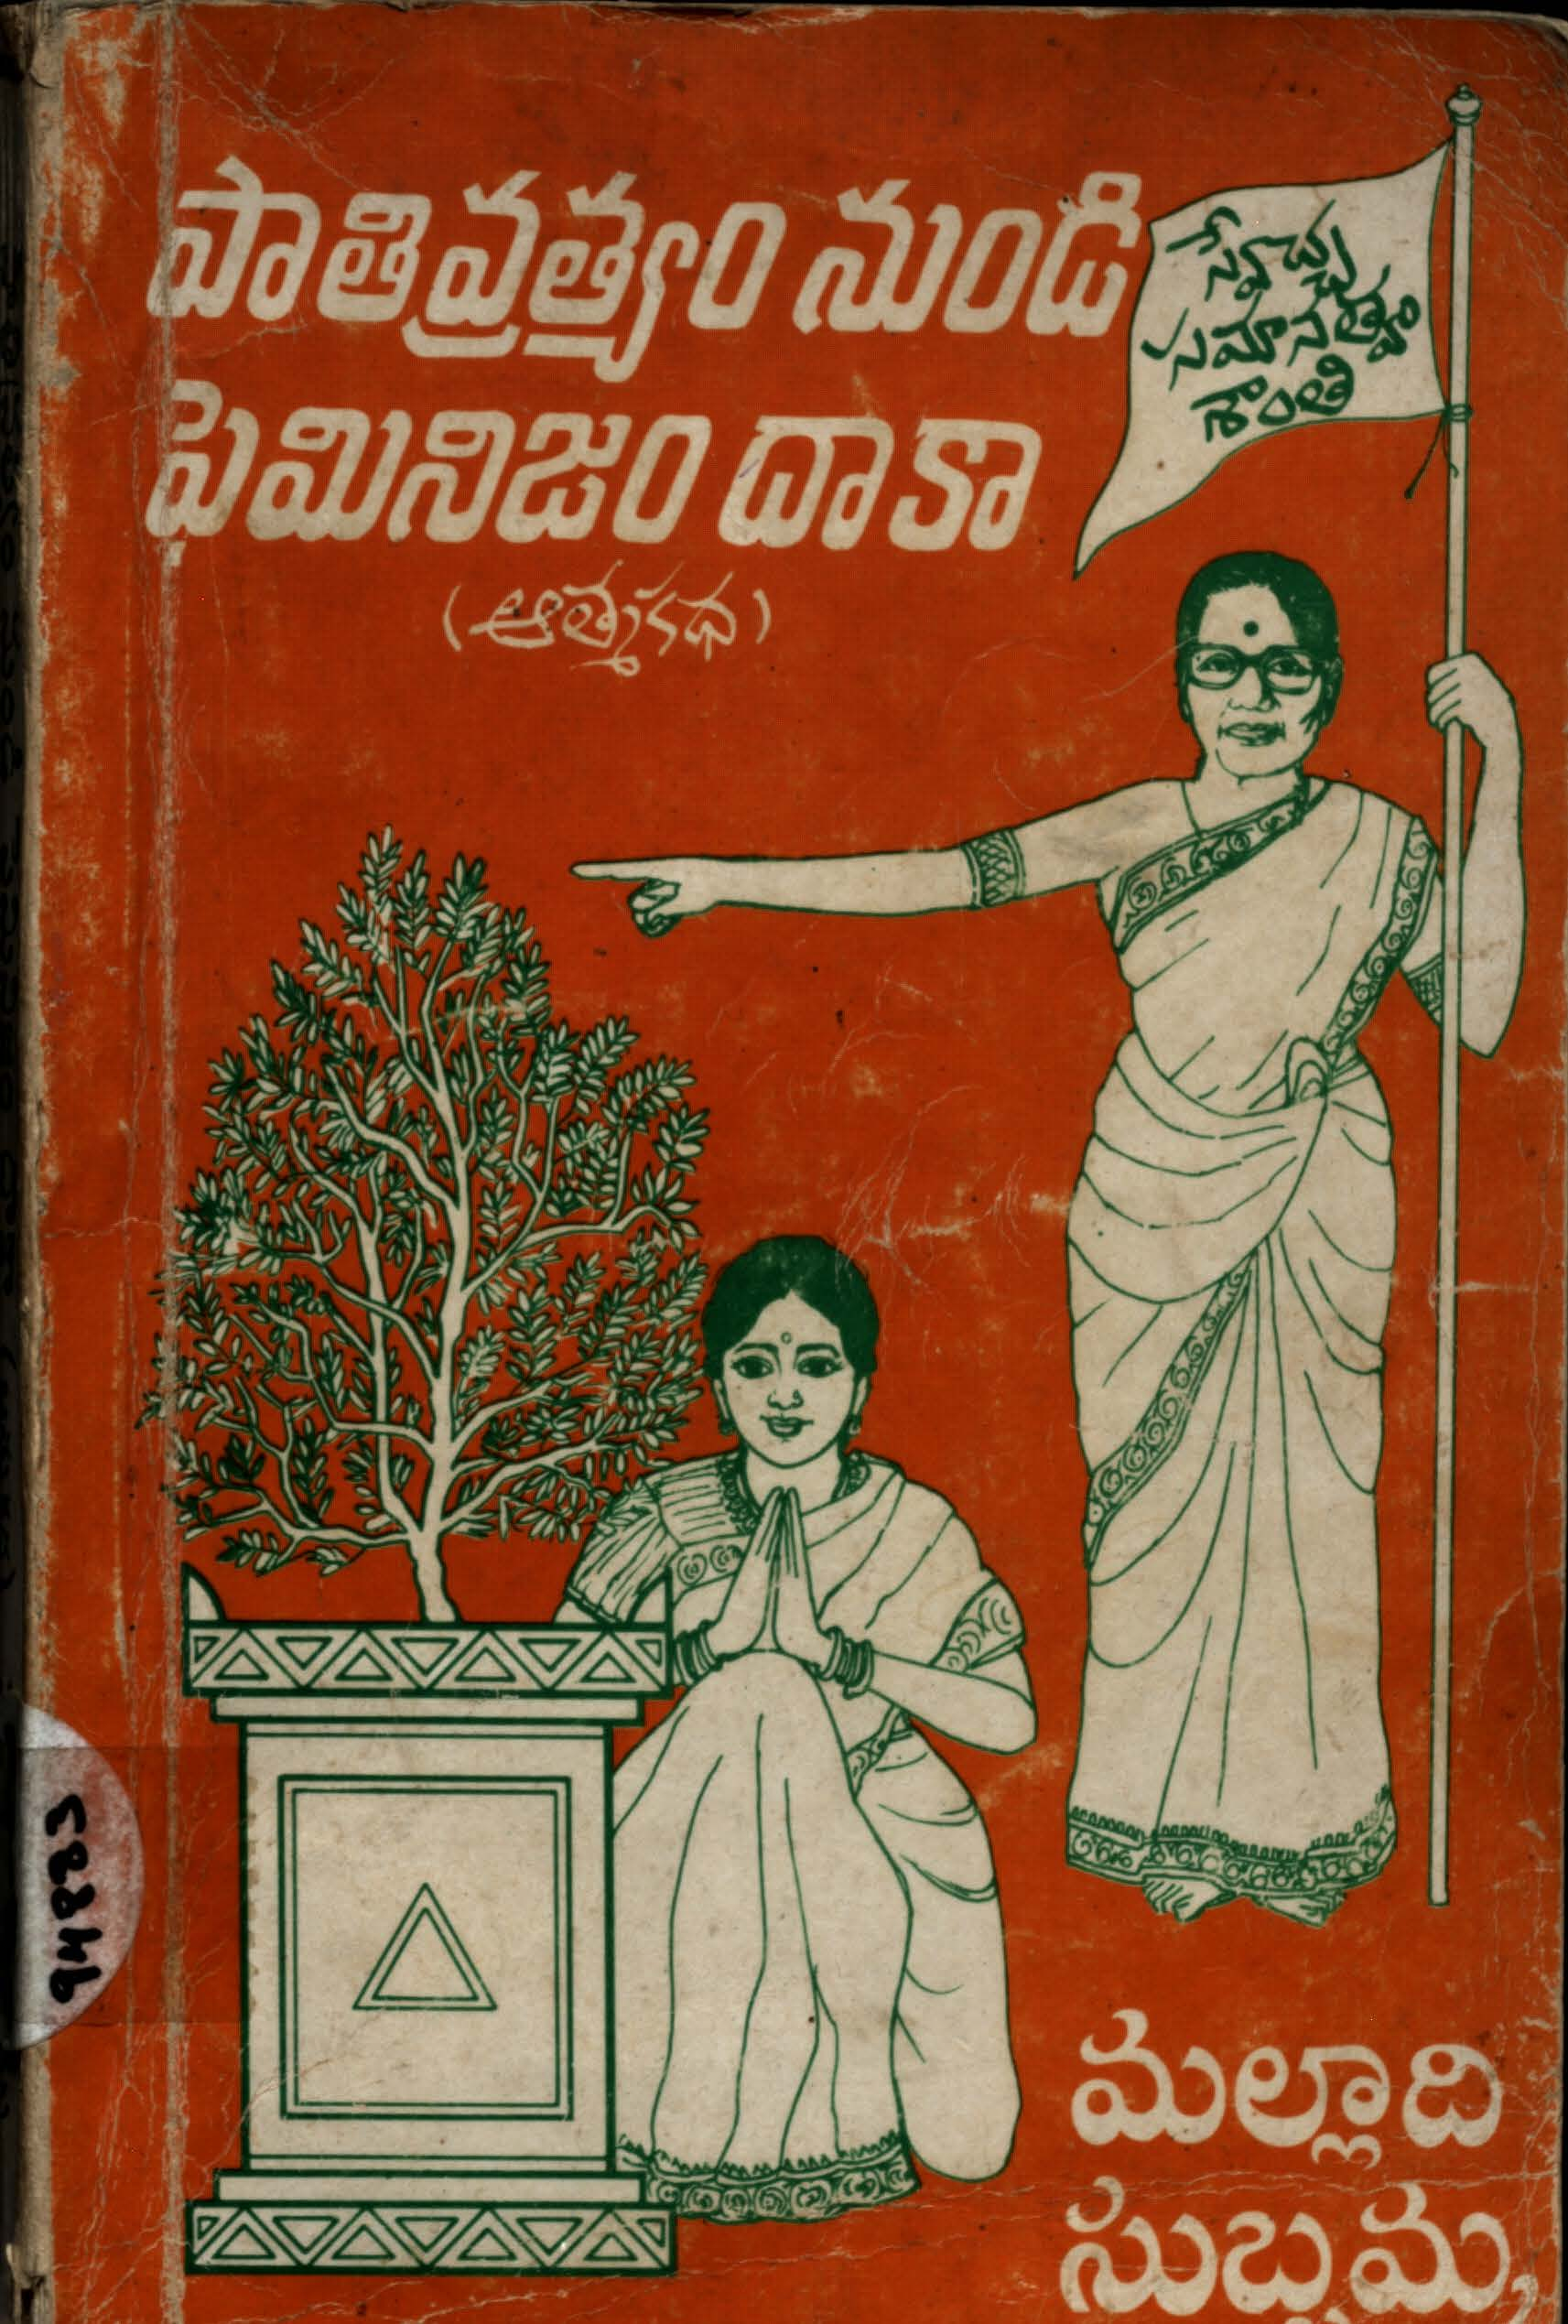 Pathivrathyam nundi Femanijam daaka